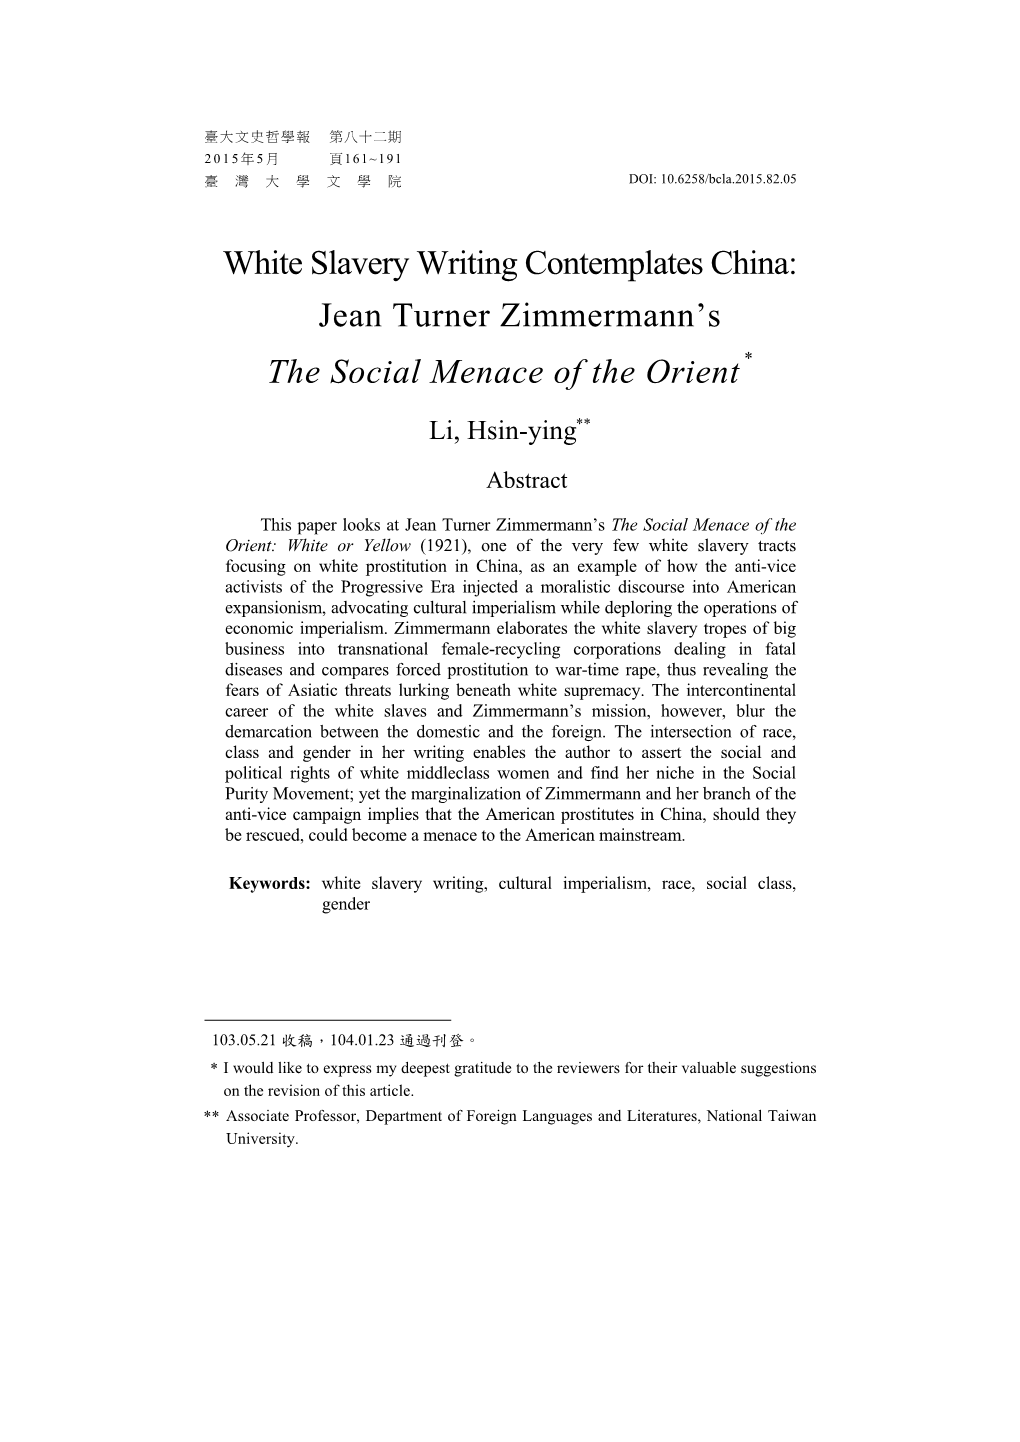 White Slavery Writing Contemplates China: Jean Turner Zimmermann's